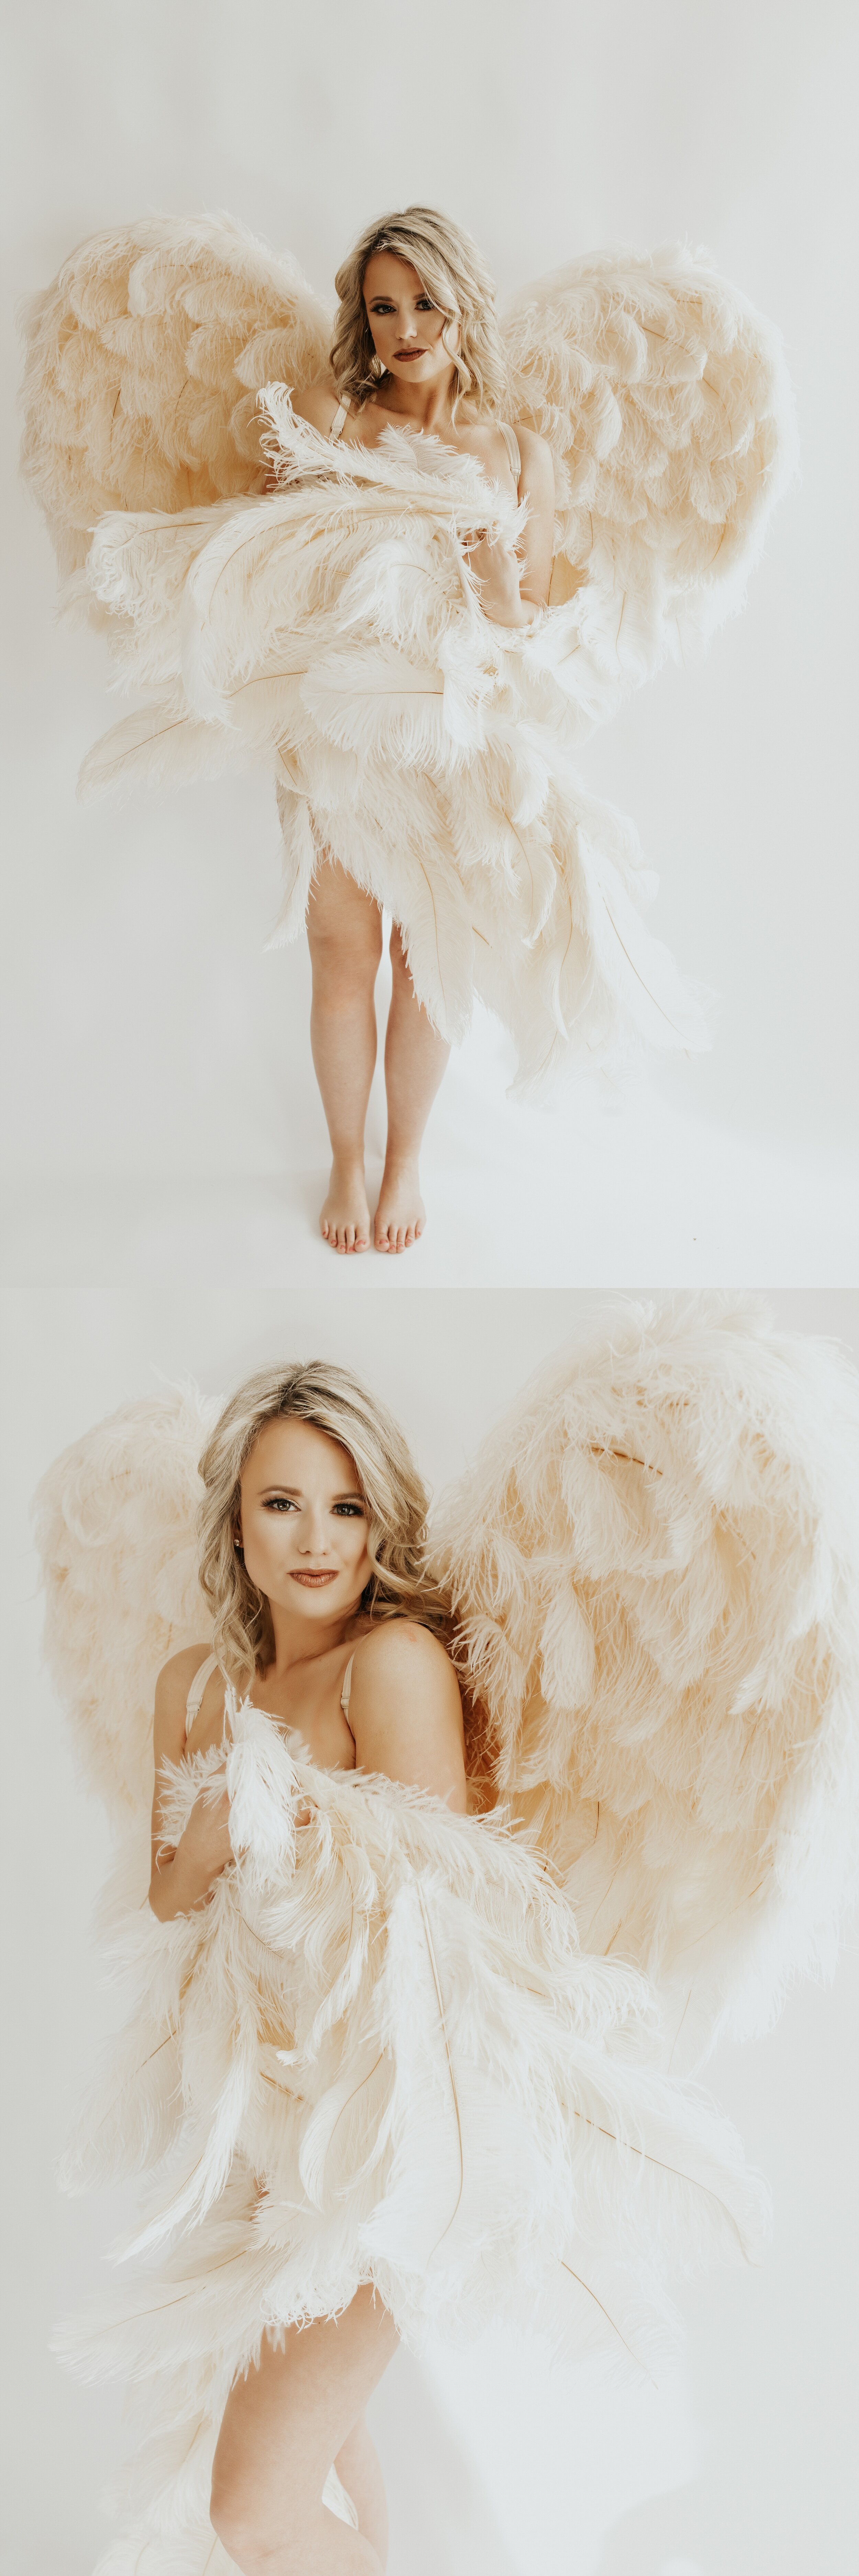 Kansas+City+Boudoir+Photography+Kansas+City+Portrait+Photography-boudoir-wings+boudoir-nude+portraits-angel+wings (2).jpeg